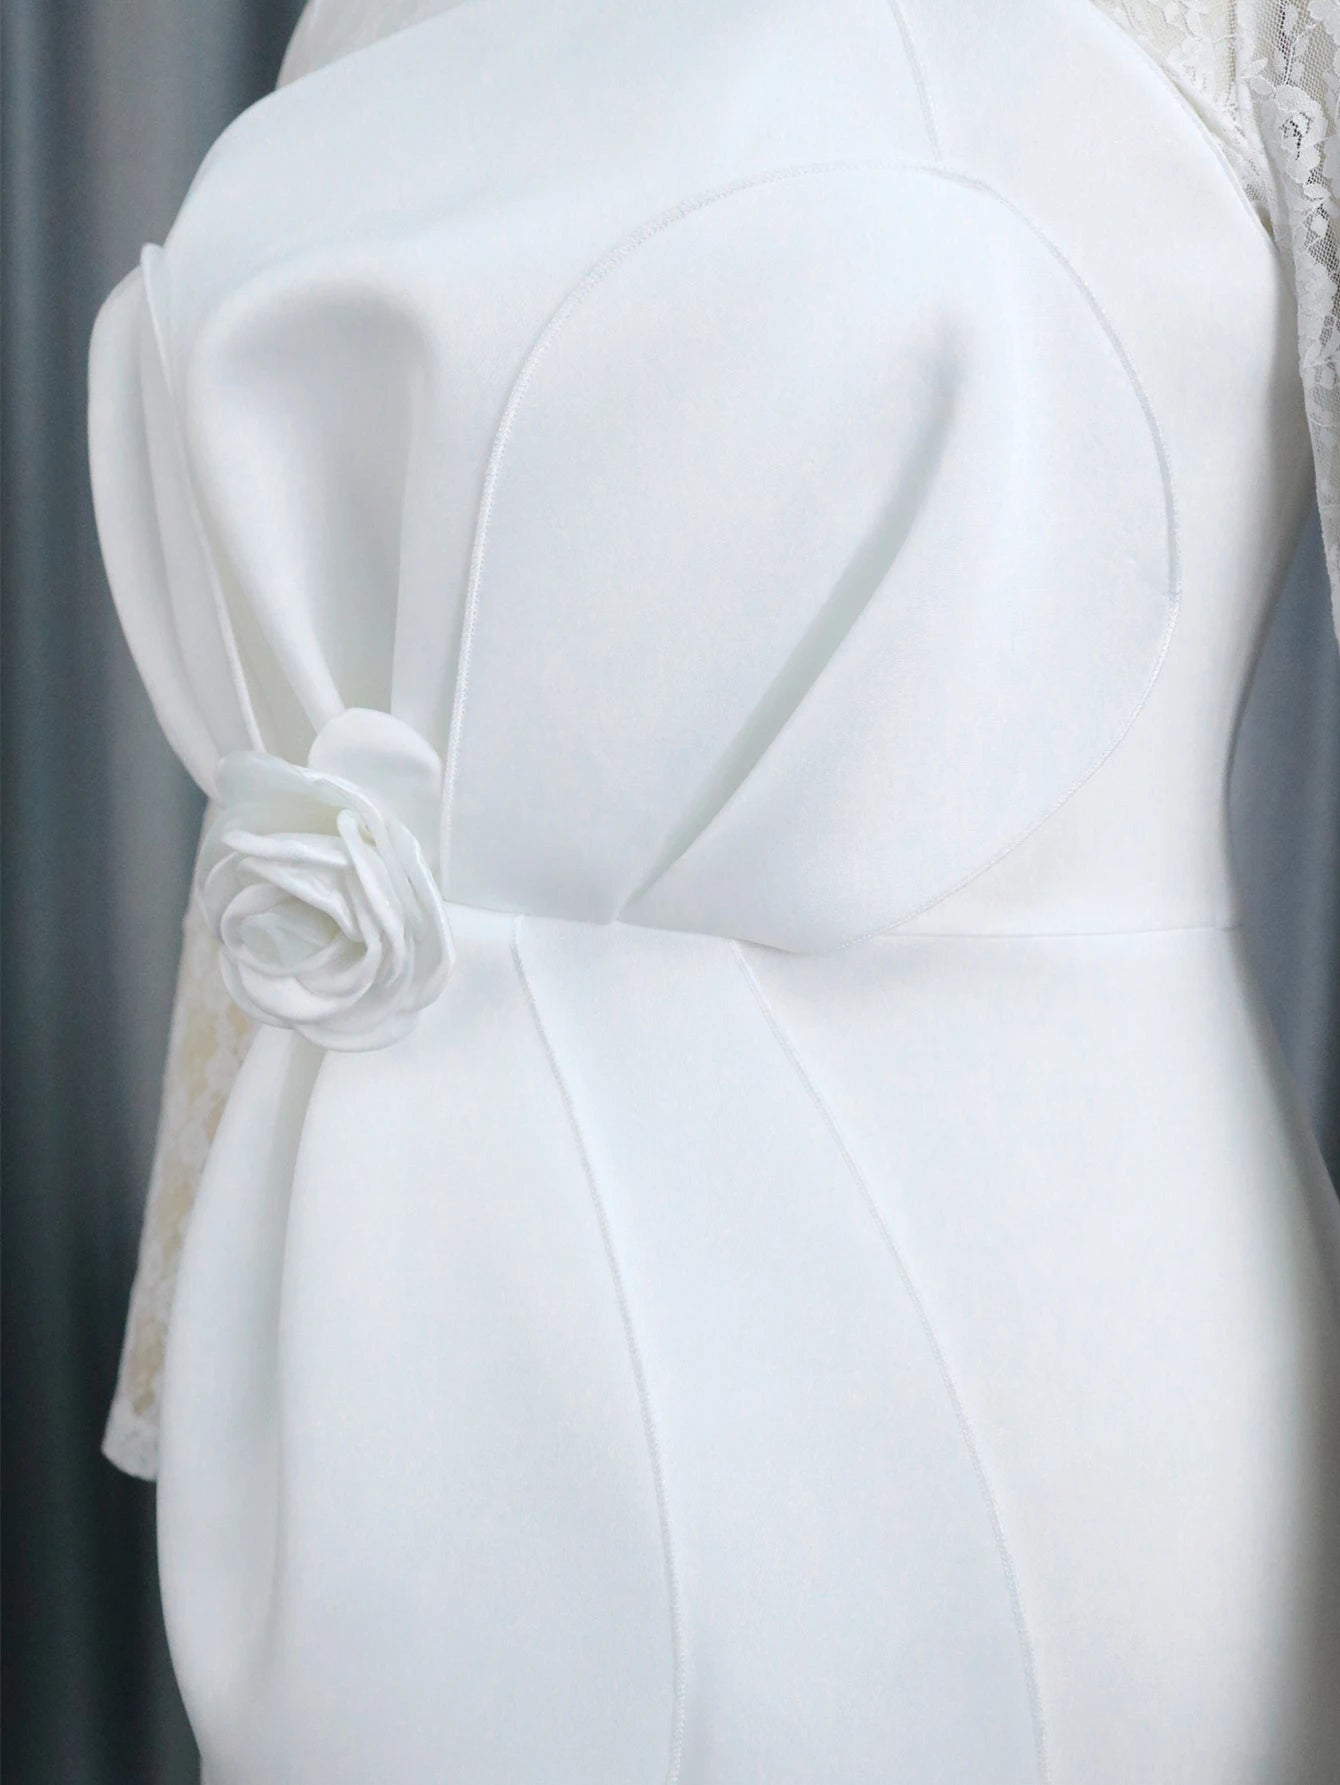 Bodycon Women's Party Dress White Lace Patchwork Dresses Long Sleeve Appliques Lotus Petal Event Bithday Wedding Fancy Robe